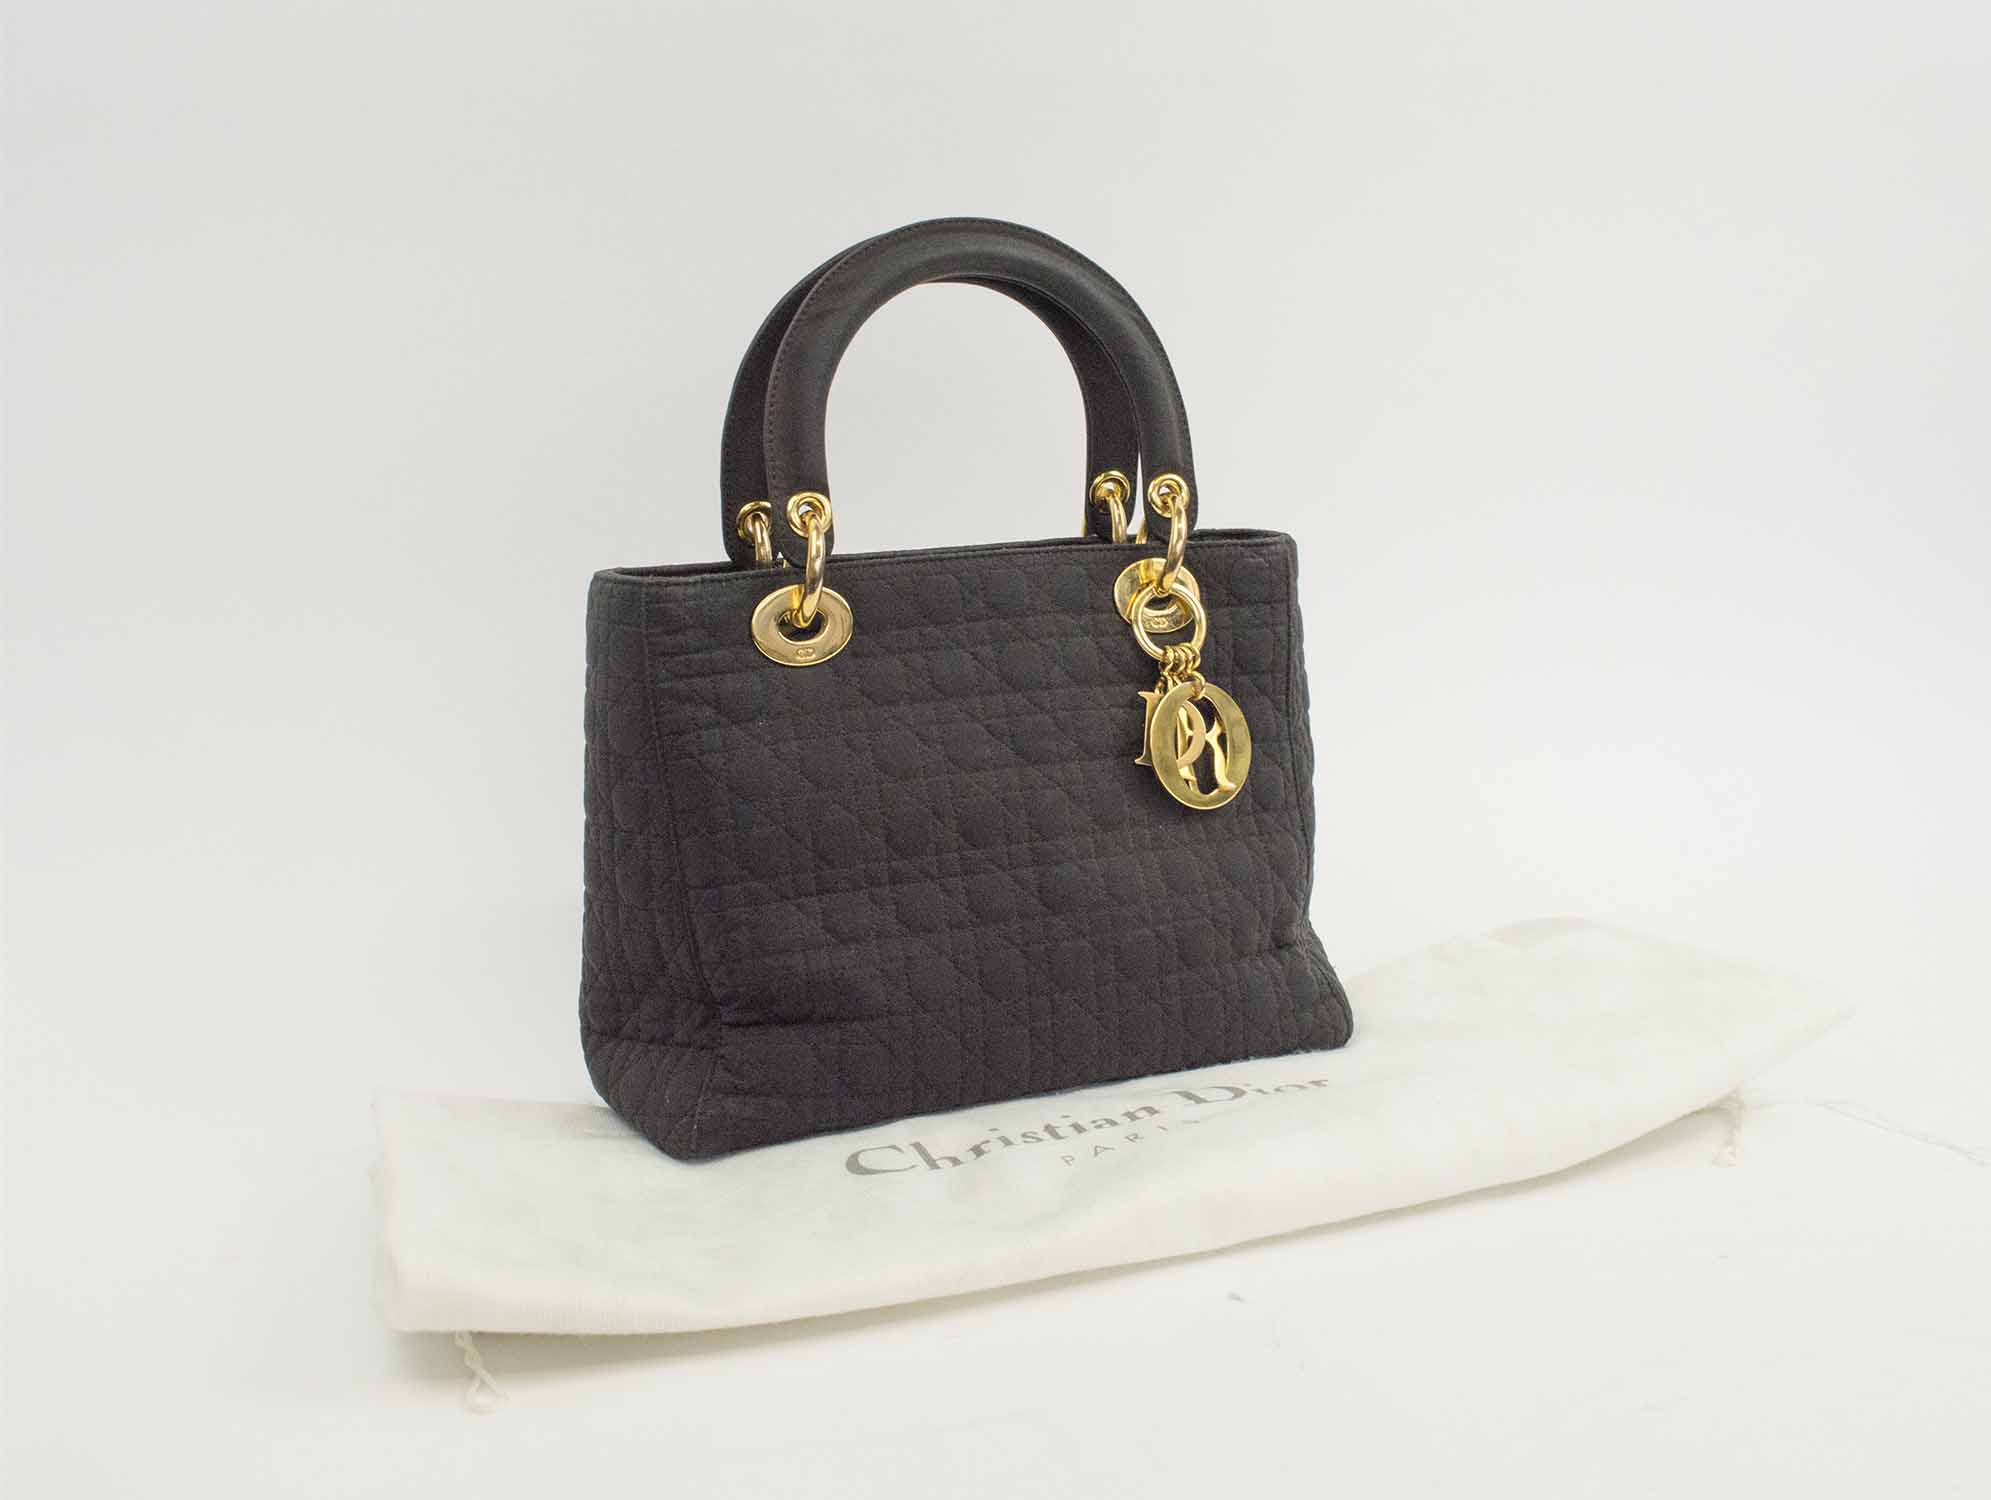 Sold at Auction: Christian Dior Bag, Christian Dior vintage brown